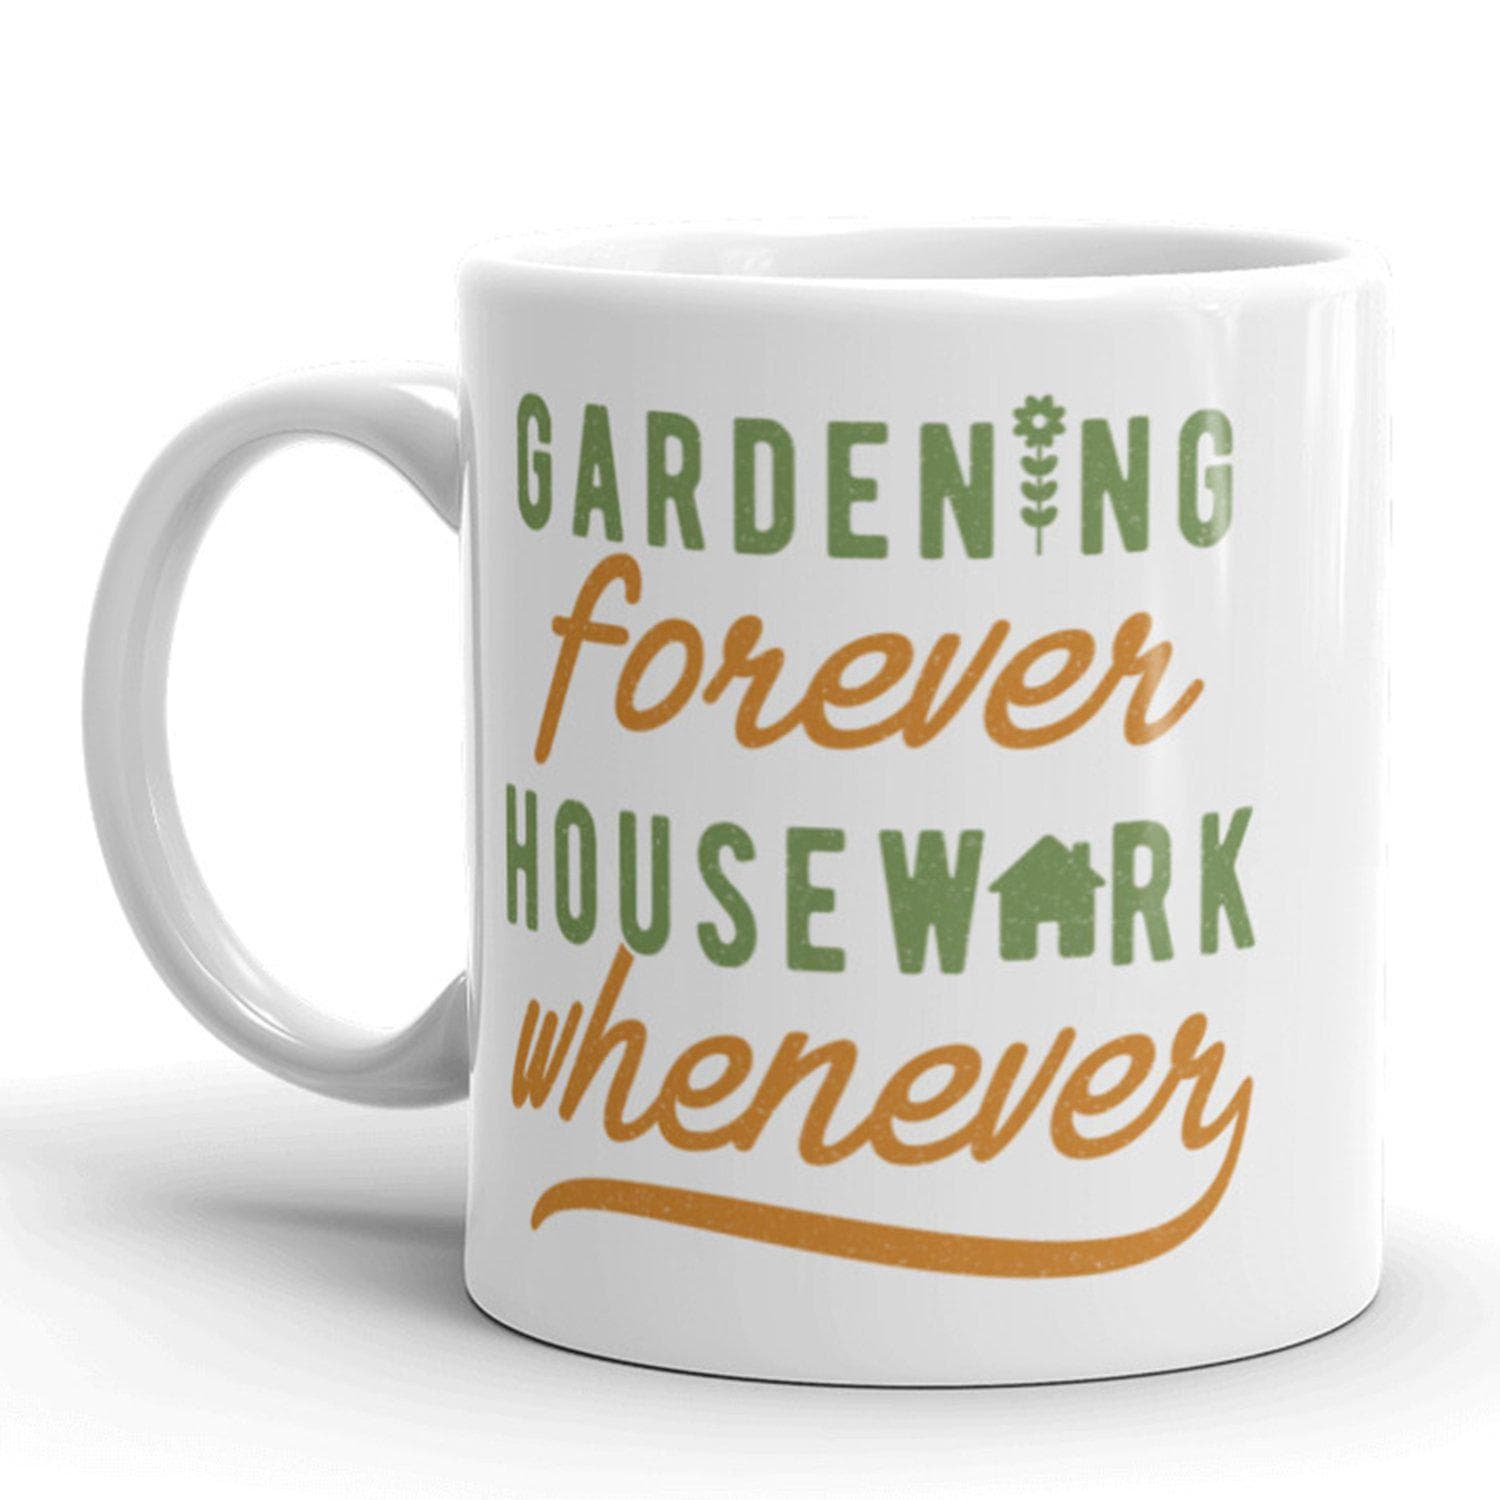 Gardening Forever Housework Whenever Mug - Crazy Dog T-Shirts